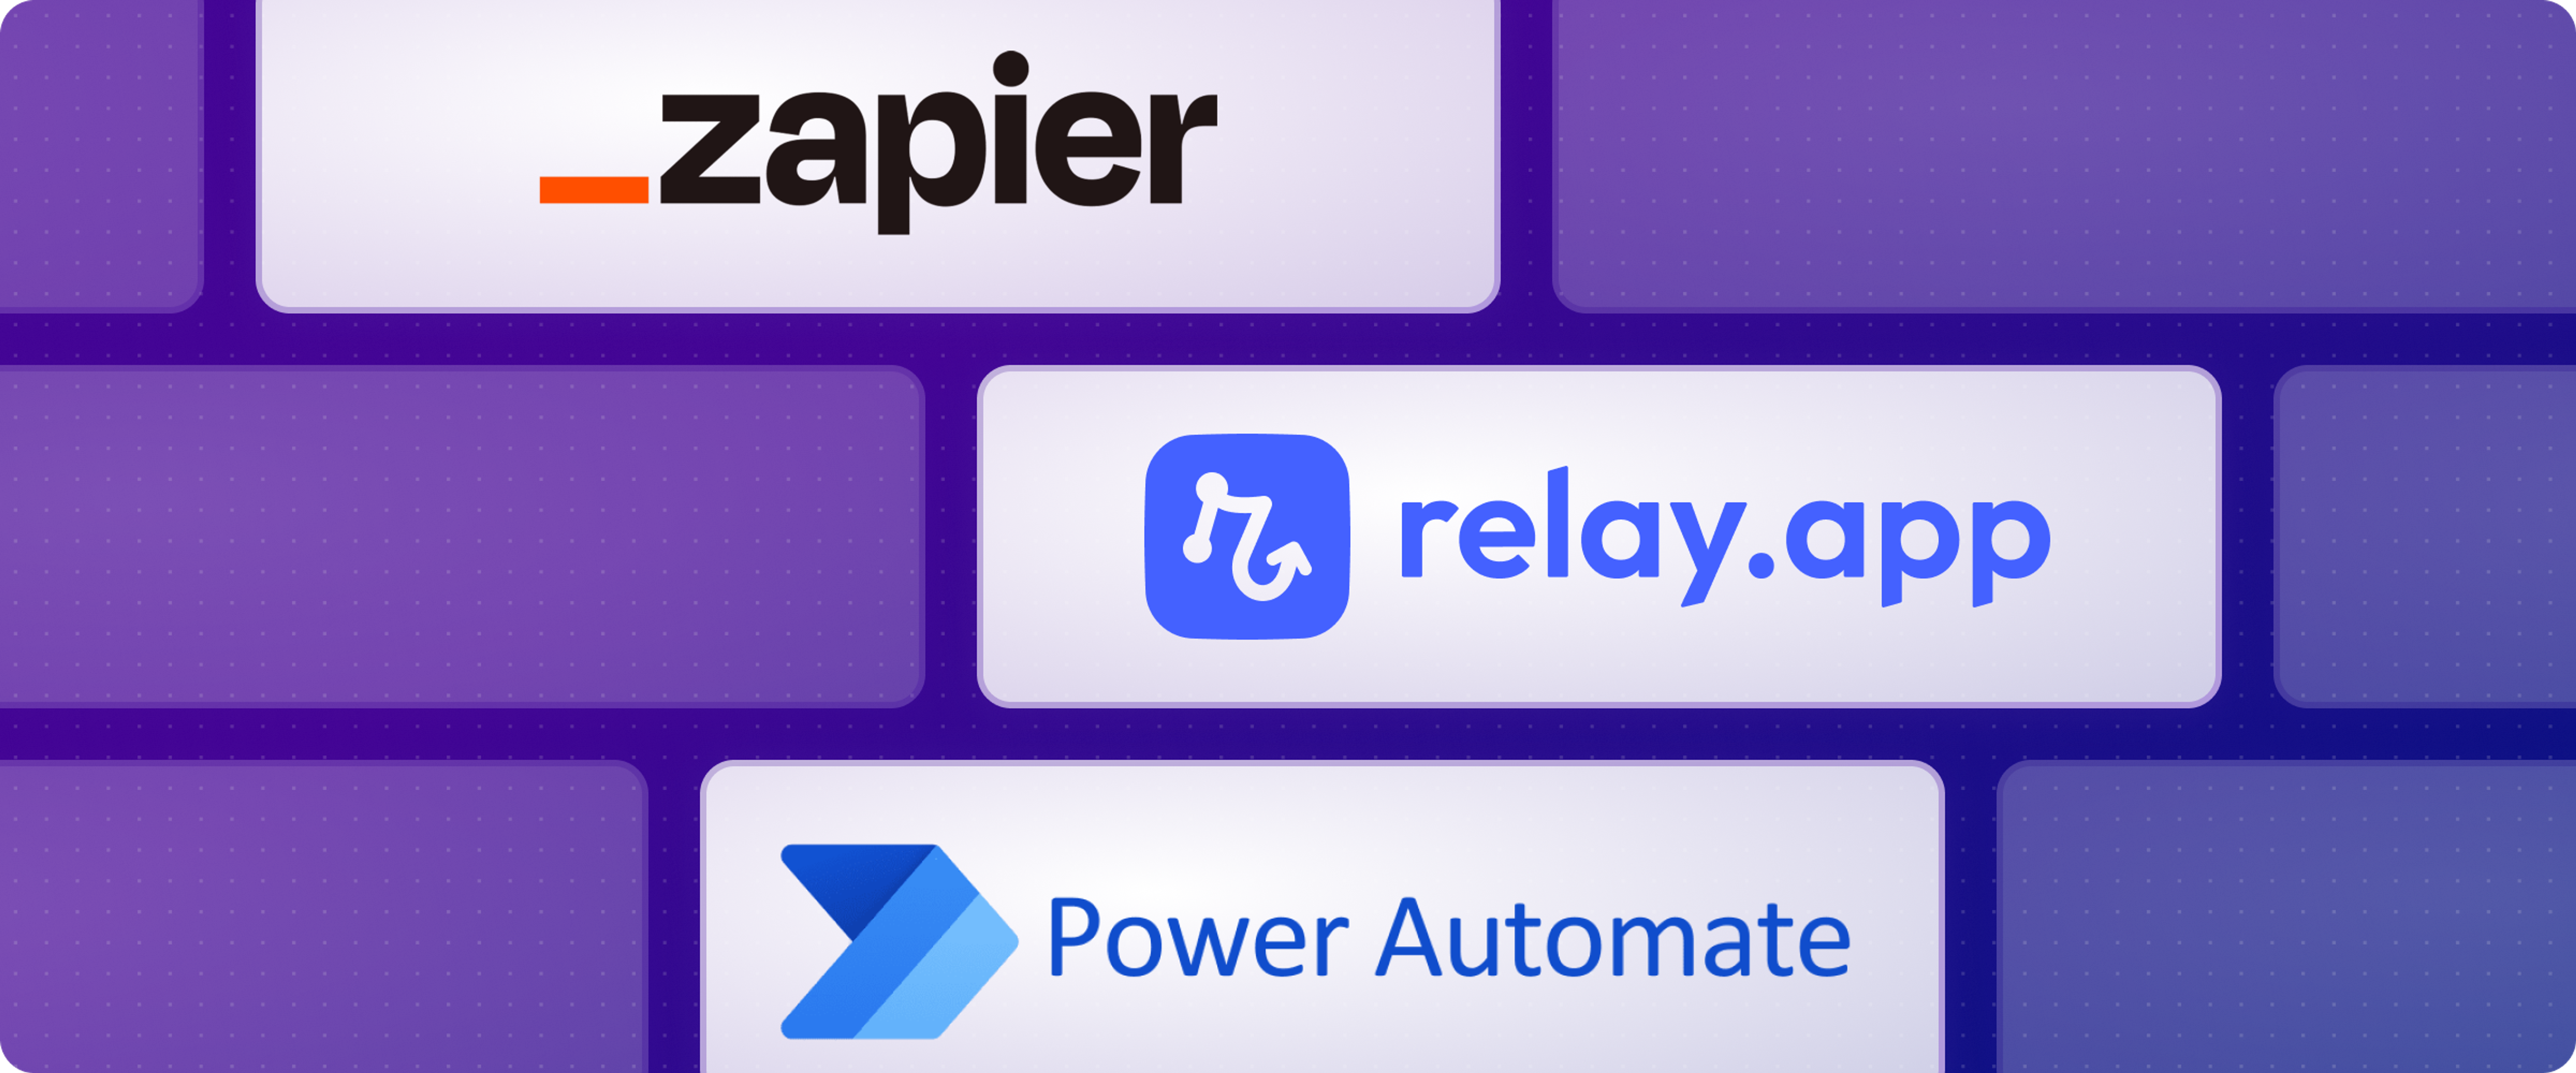 Thumbnail for Zapier vs Power Automate vs Relay.app article